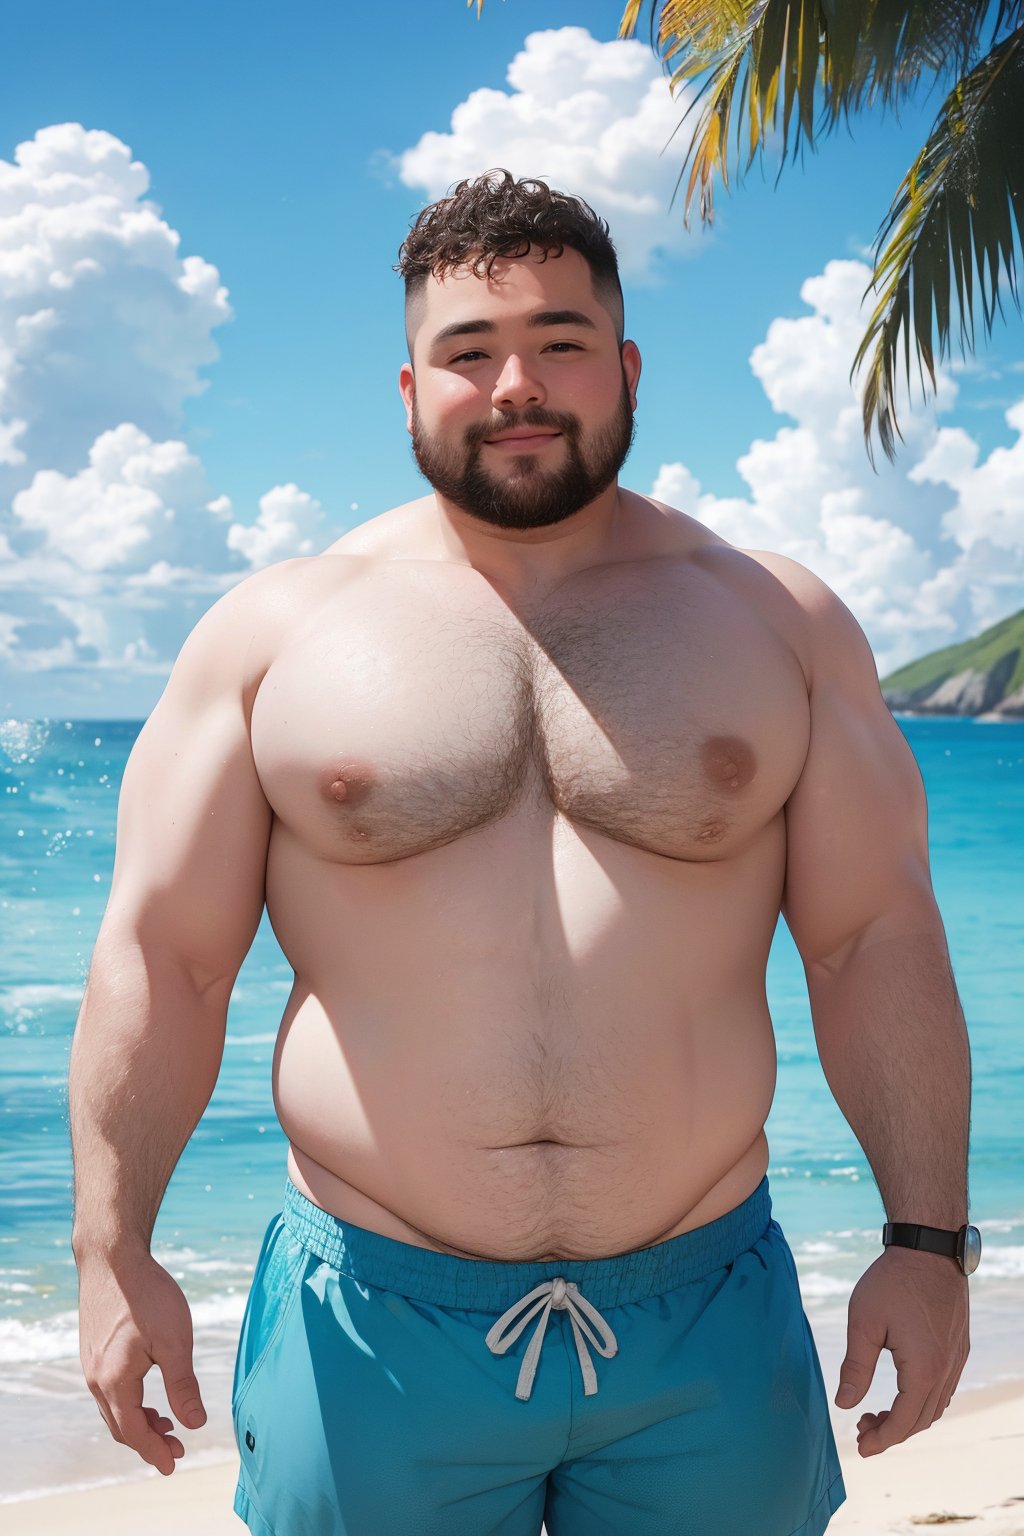  man chubby man(chubby muscle man) (chubby man)(masterpiece)in a fantasy beach ⛱️, sea ⛵, ocean 🌊 underwater 